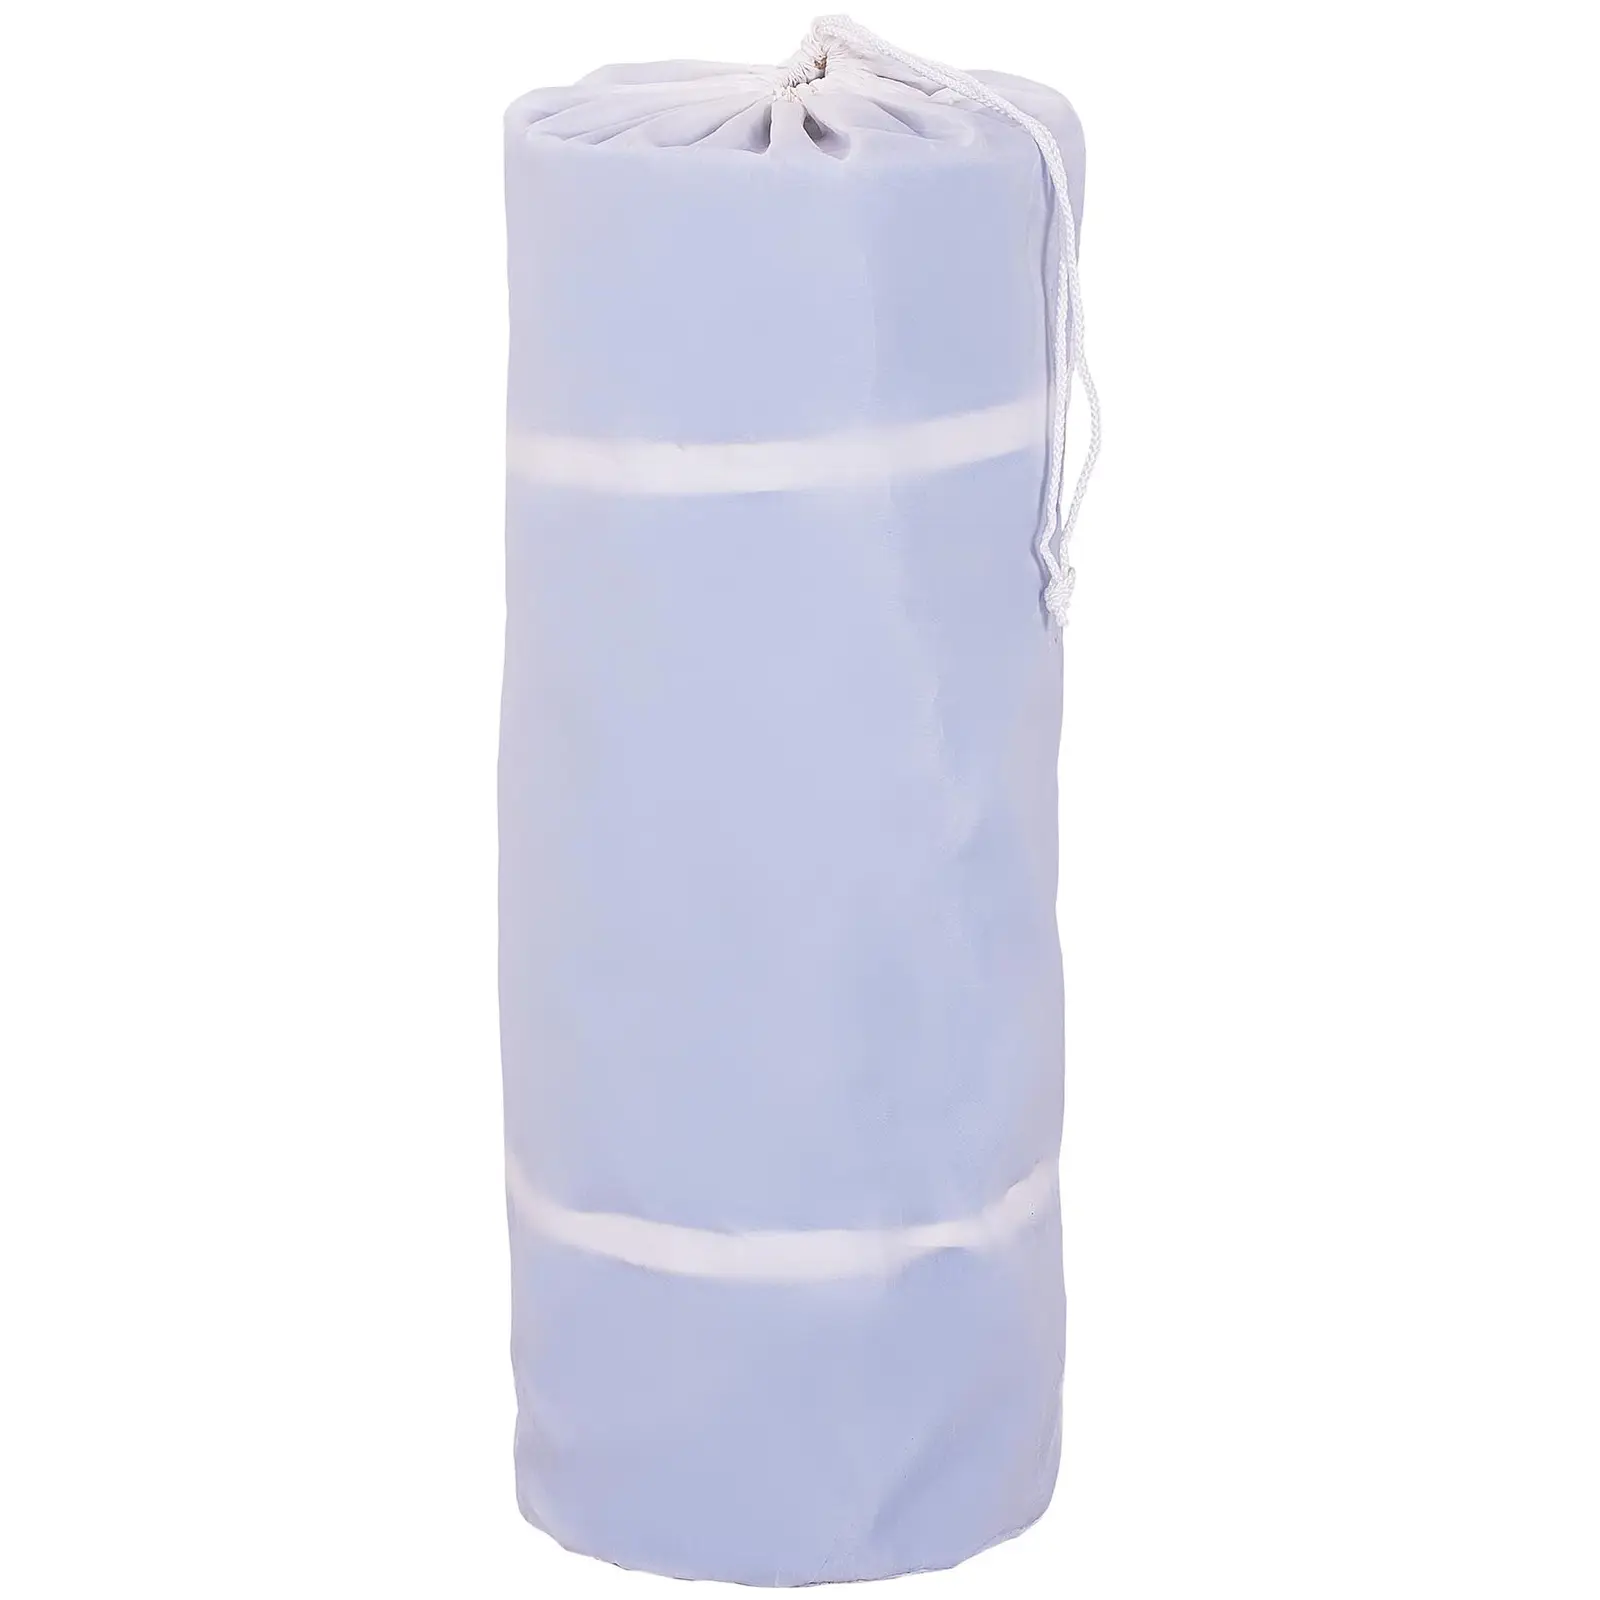 Set tappetino da ginnastica gonfiabile con pompa inclusa - 600 x 200 x 20 cm - 400 kg - blu/bianco